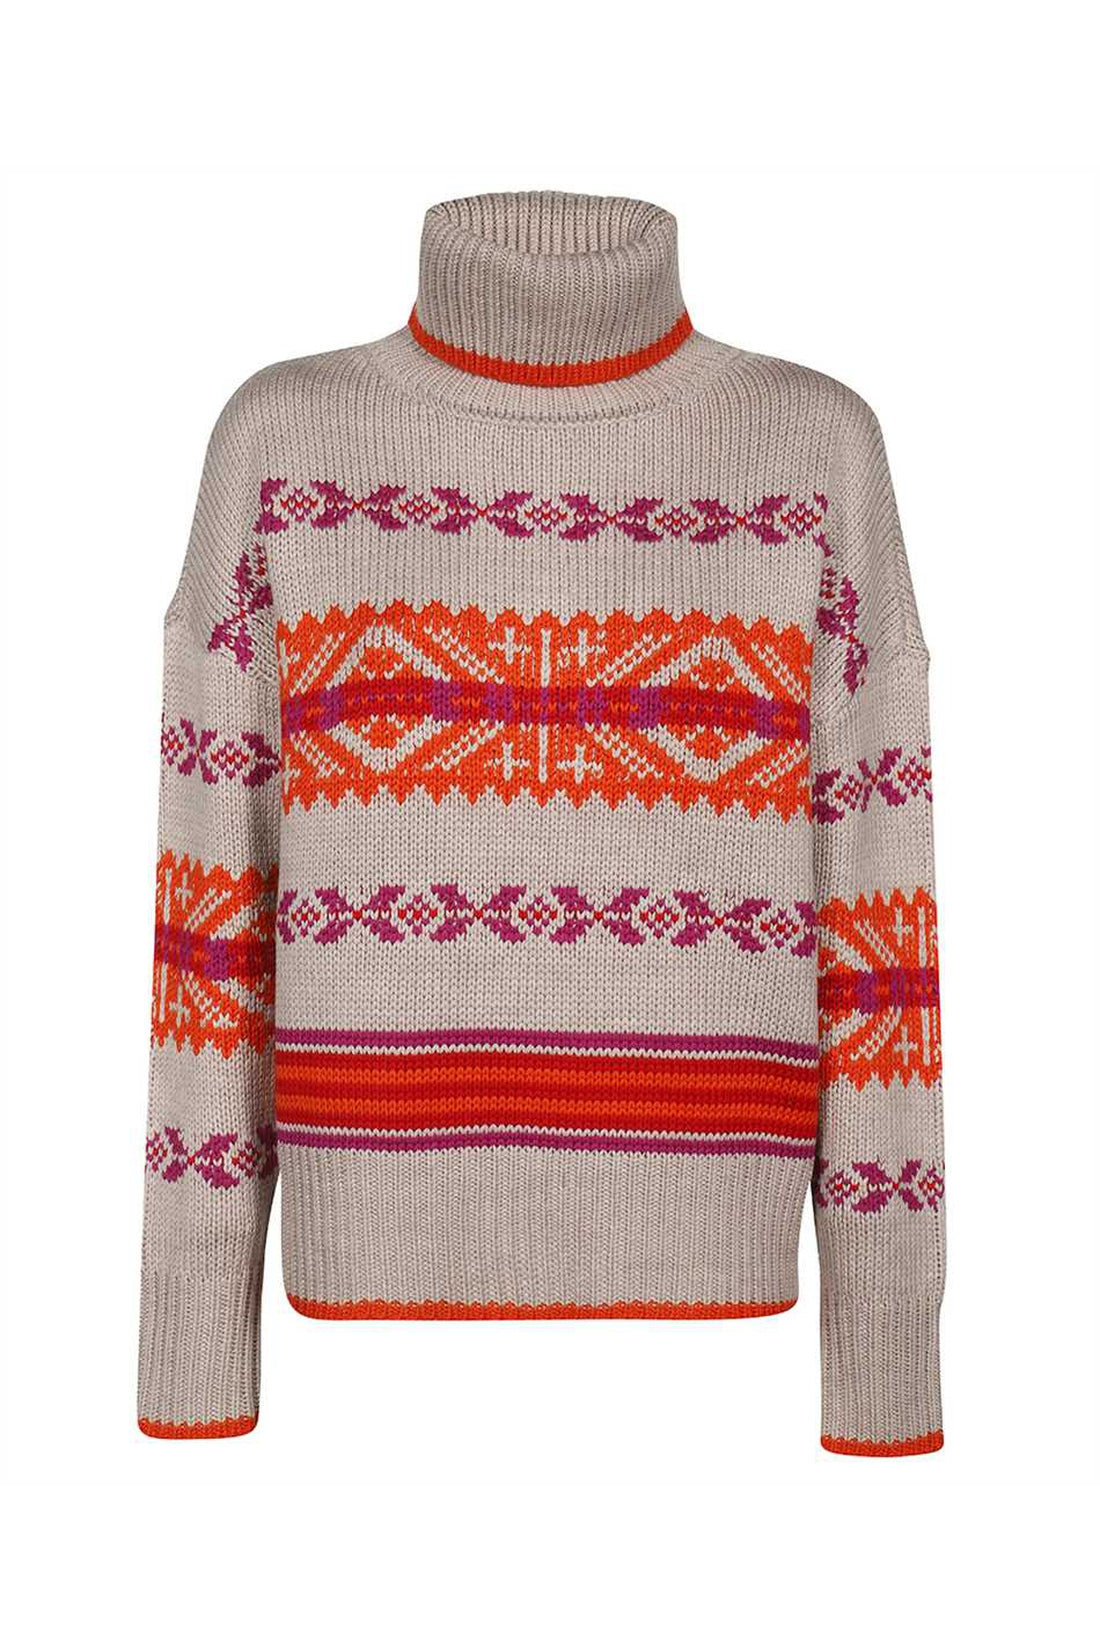 Parajumpers-OUTLET-SALE-Nanaka turtleneck sweater-ARCHIVIST